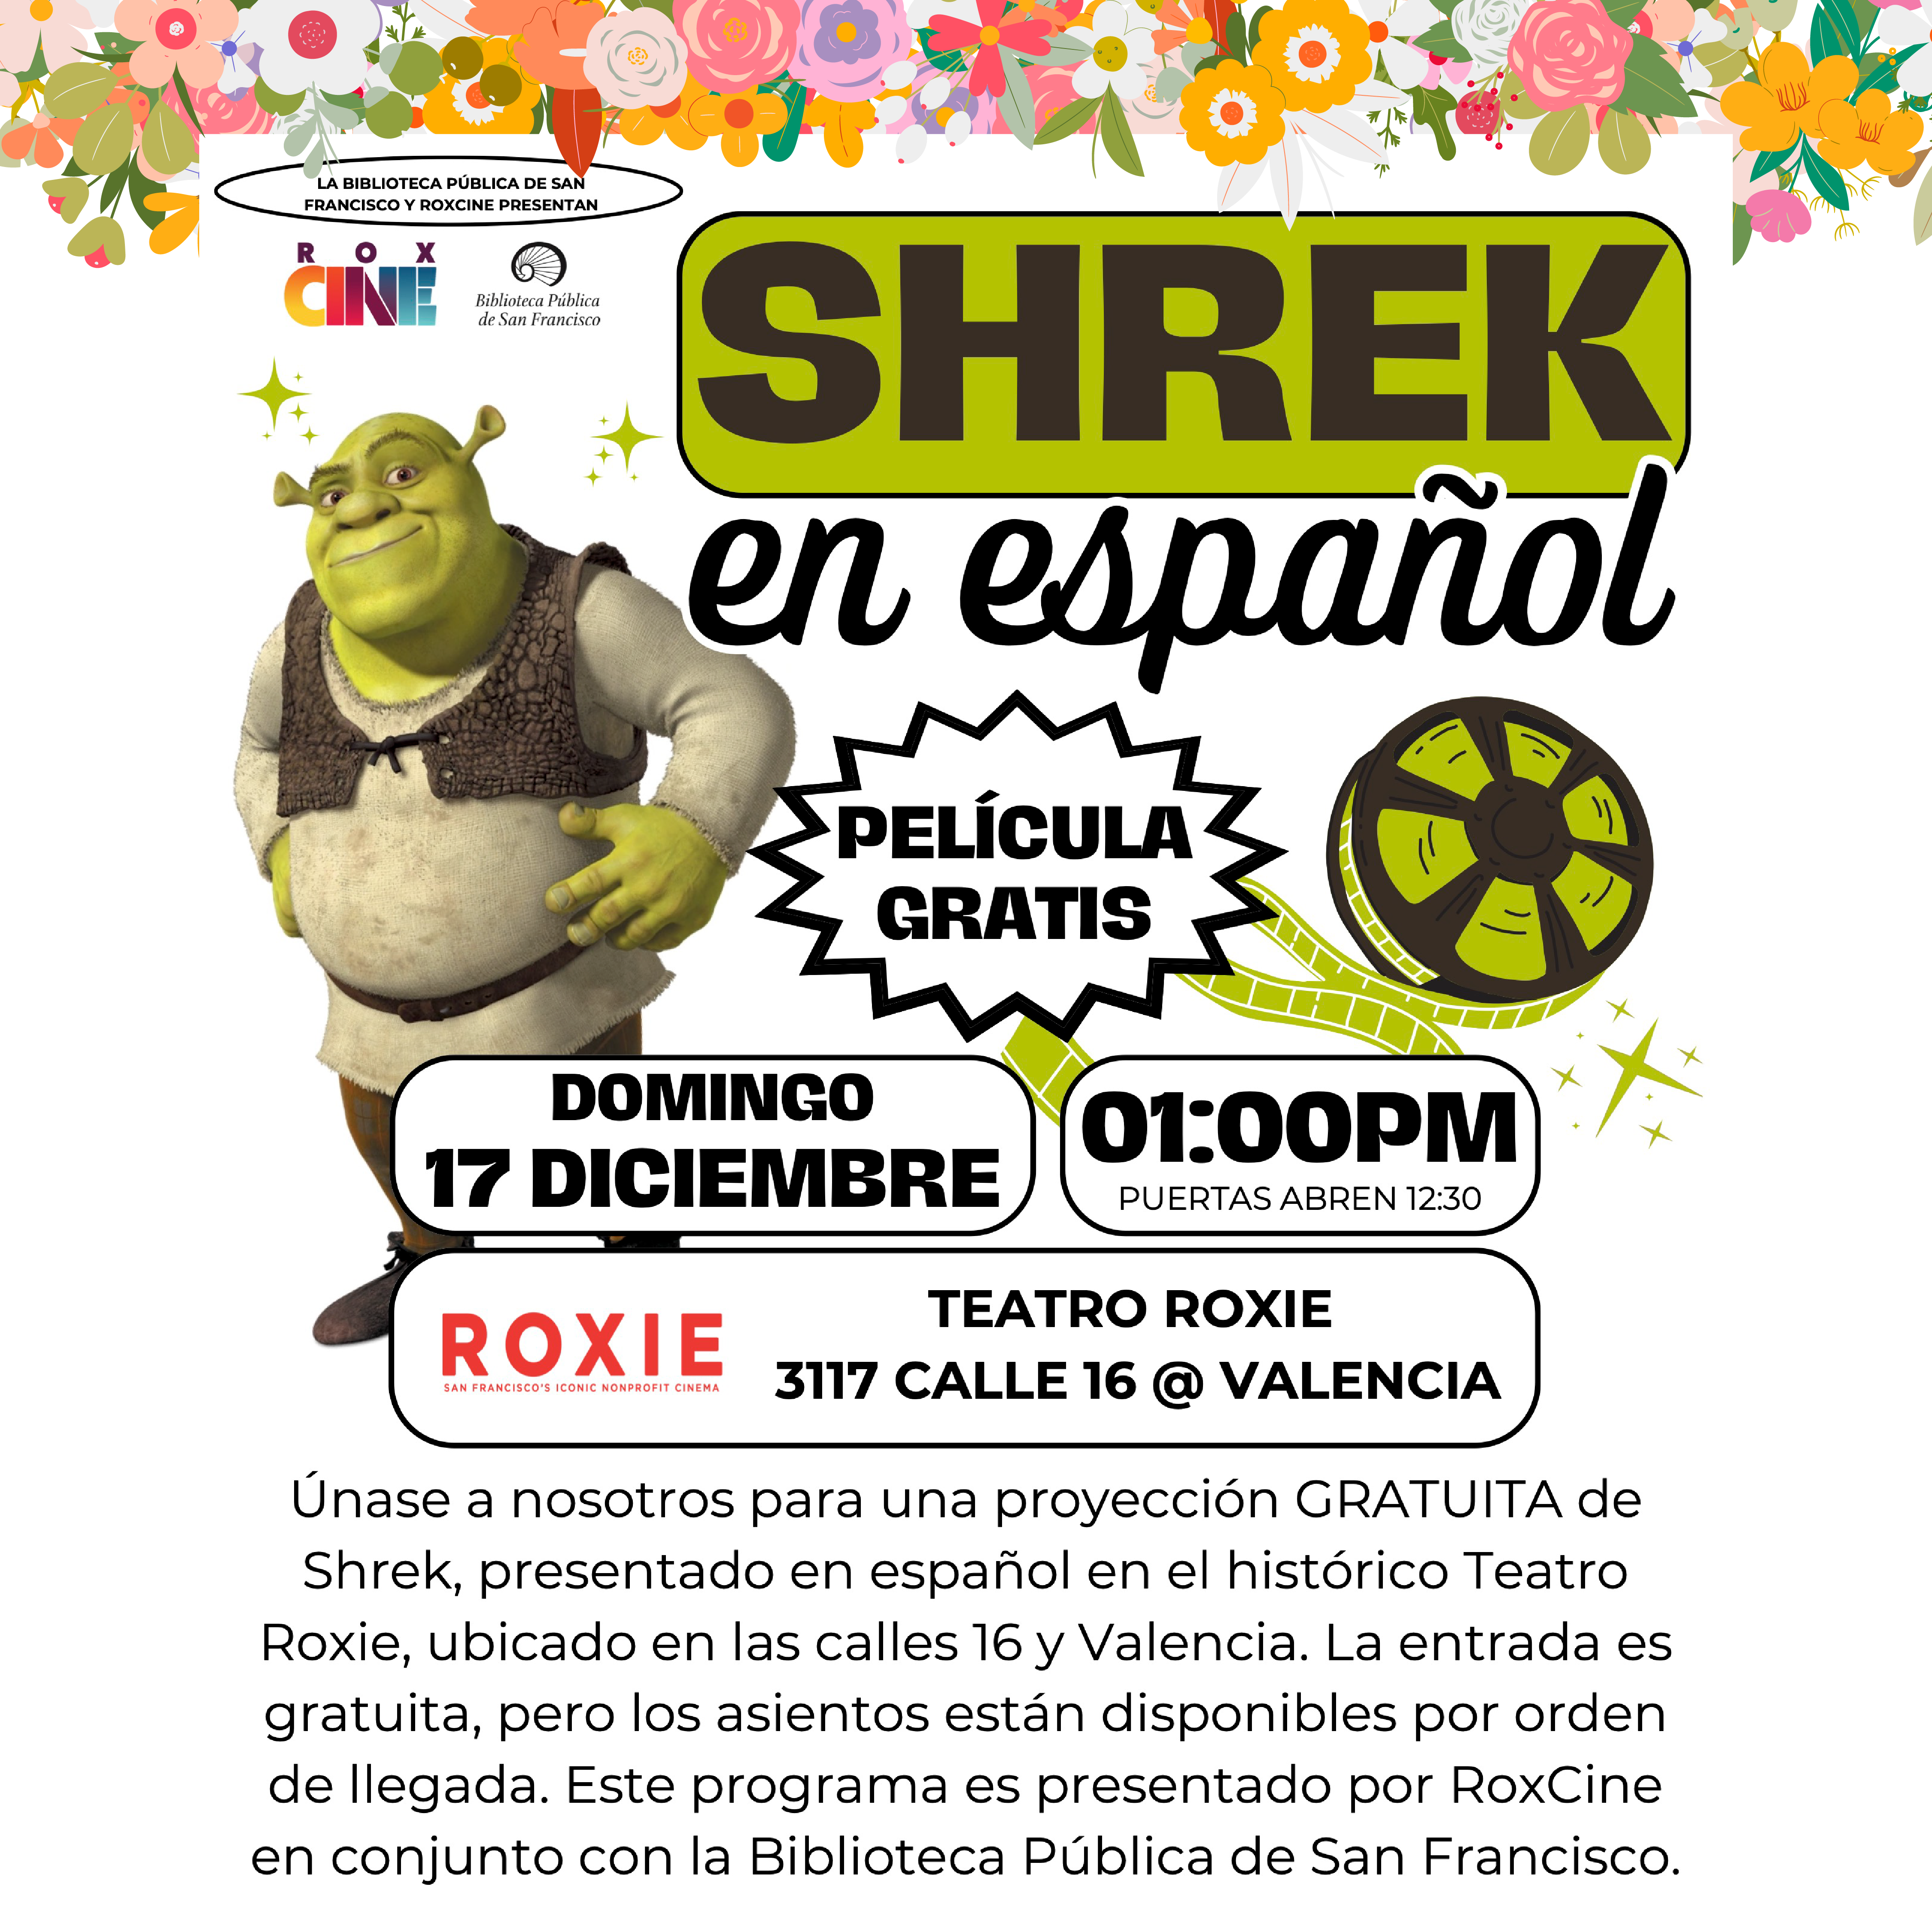 Shrek (en español) promotional poster